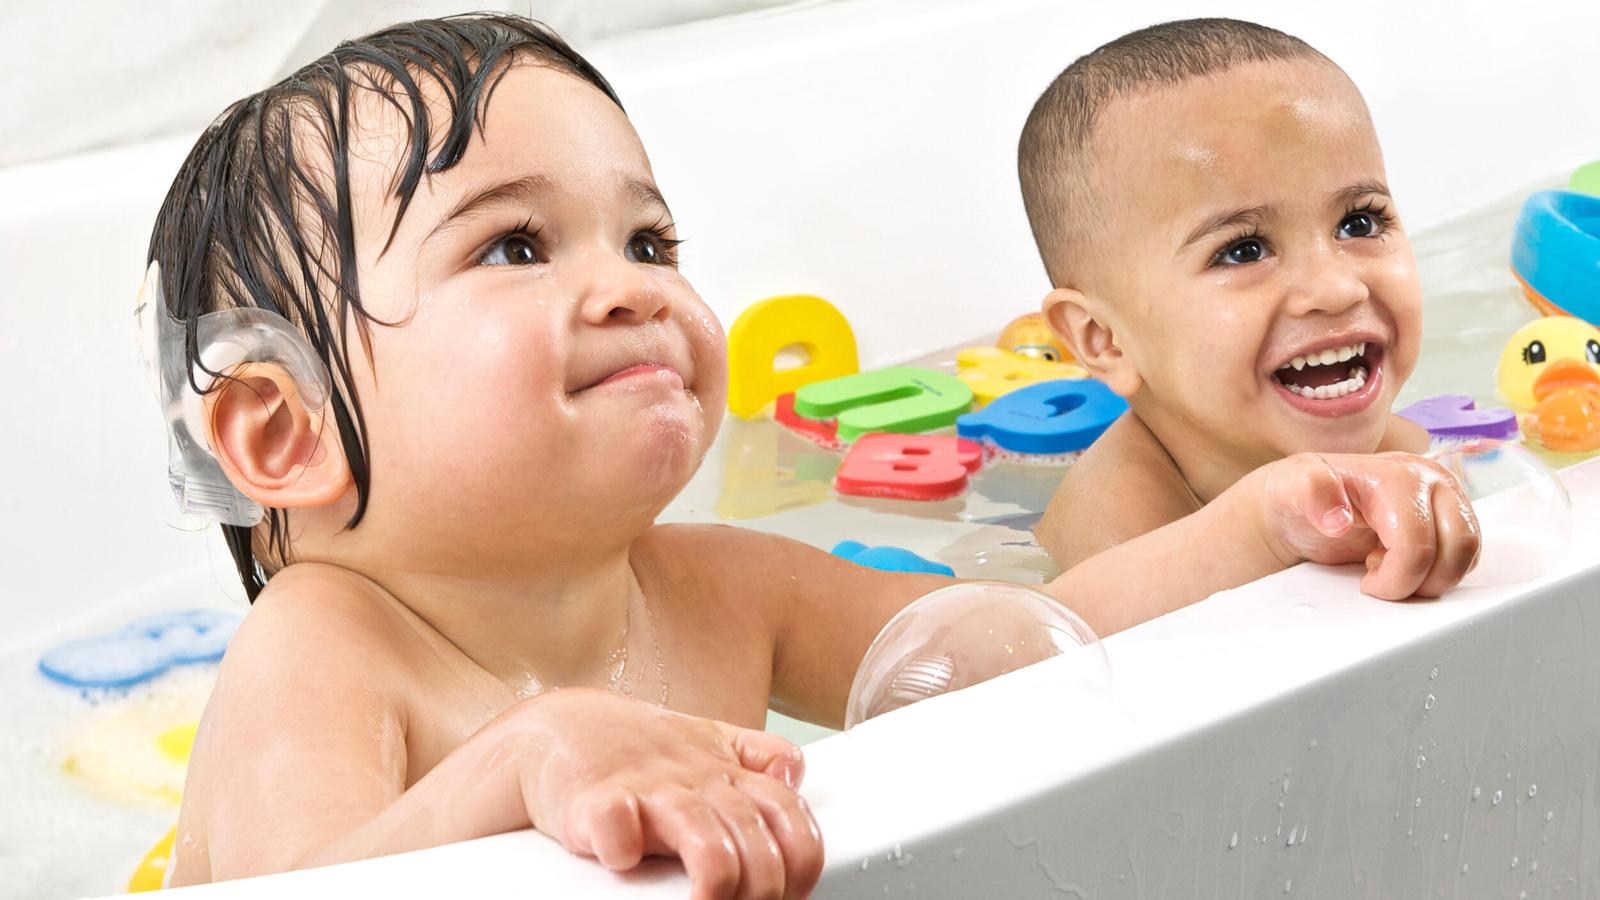 Un niño pequeño, que lleva un accesorio Aqua, se baña con un amigo.